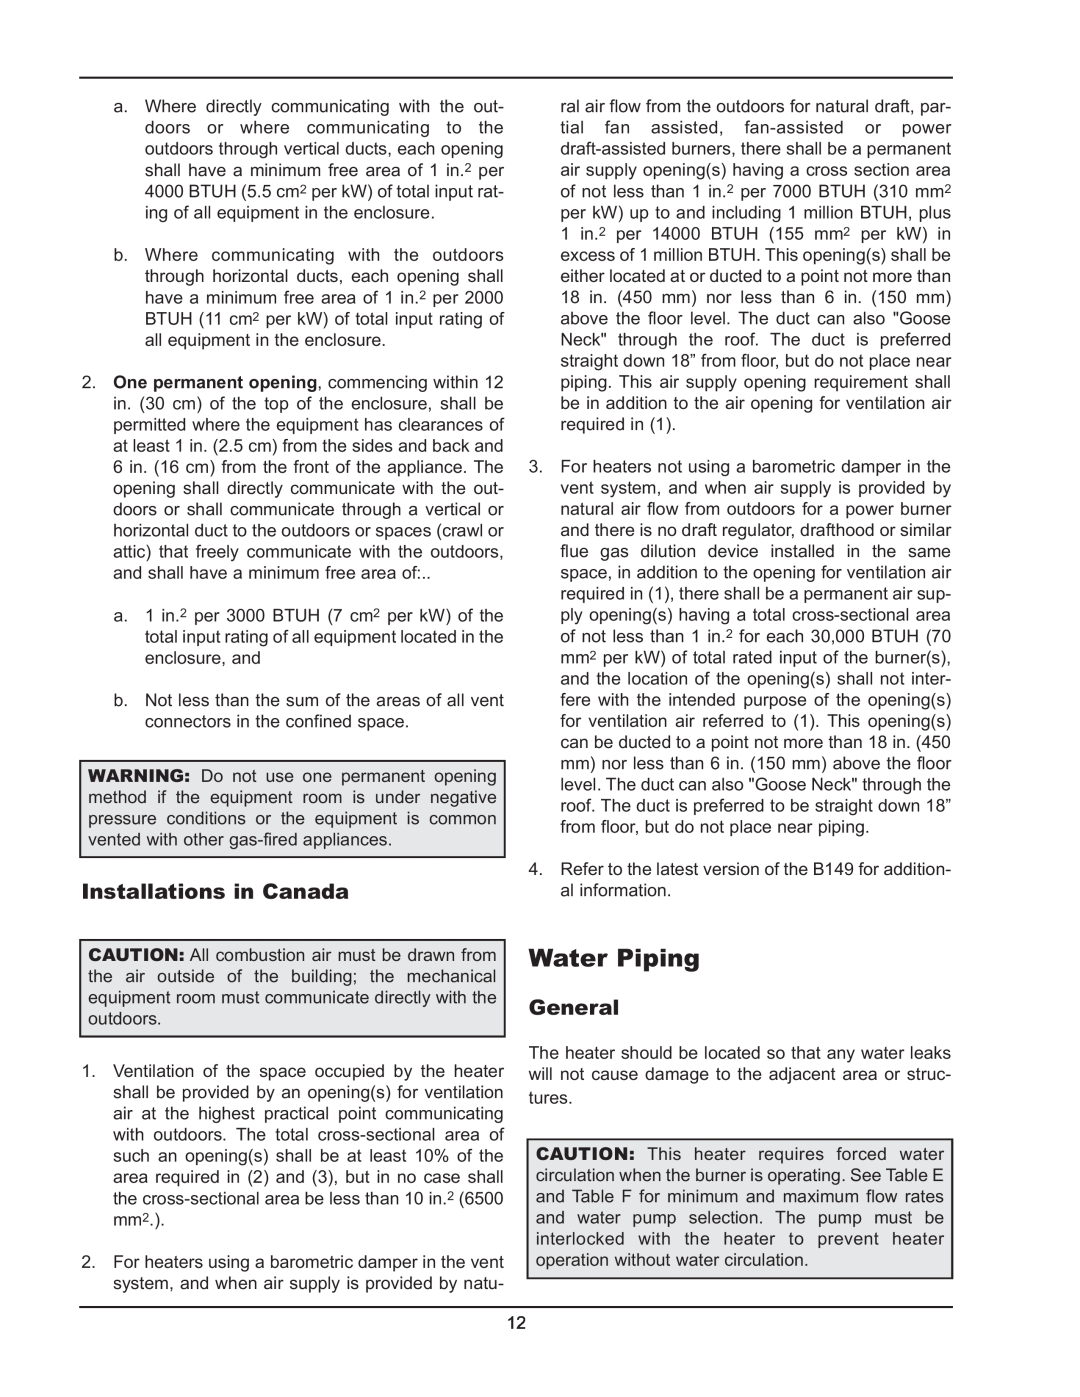 Raypak HD401, HD101 manual Water Piping, Installations in Canada, General 